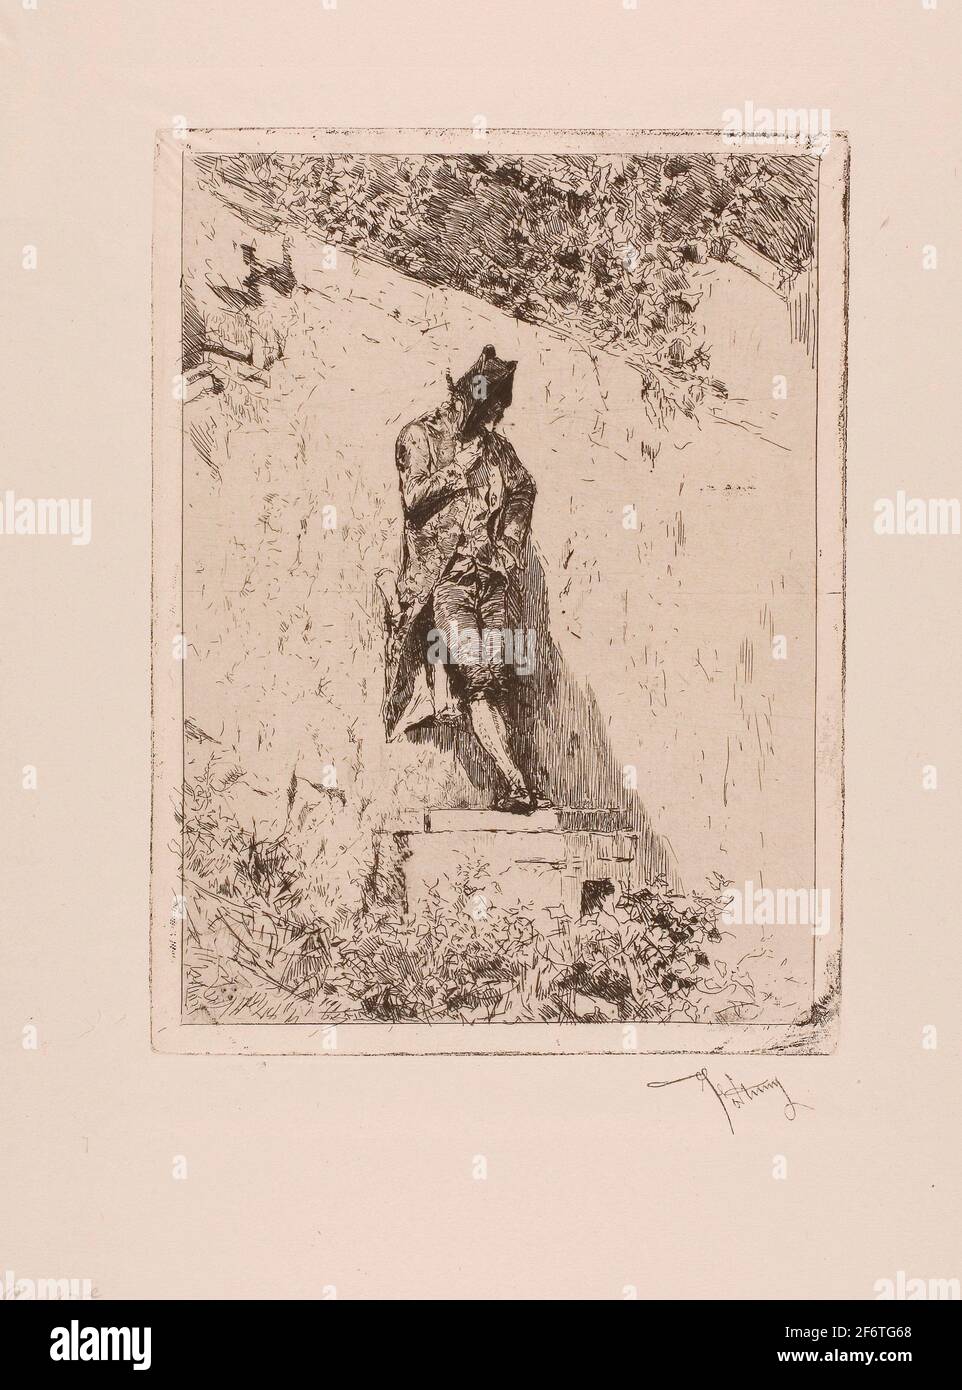 Author: Mariano Fortuny y Marsal. Meditation - Mariano Jos Mara Bernardo Fortuny y Carb Spanish, 1838-1874. Etching on paper. 1858'1874. Spain. Stock Photo